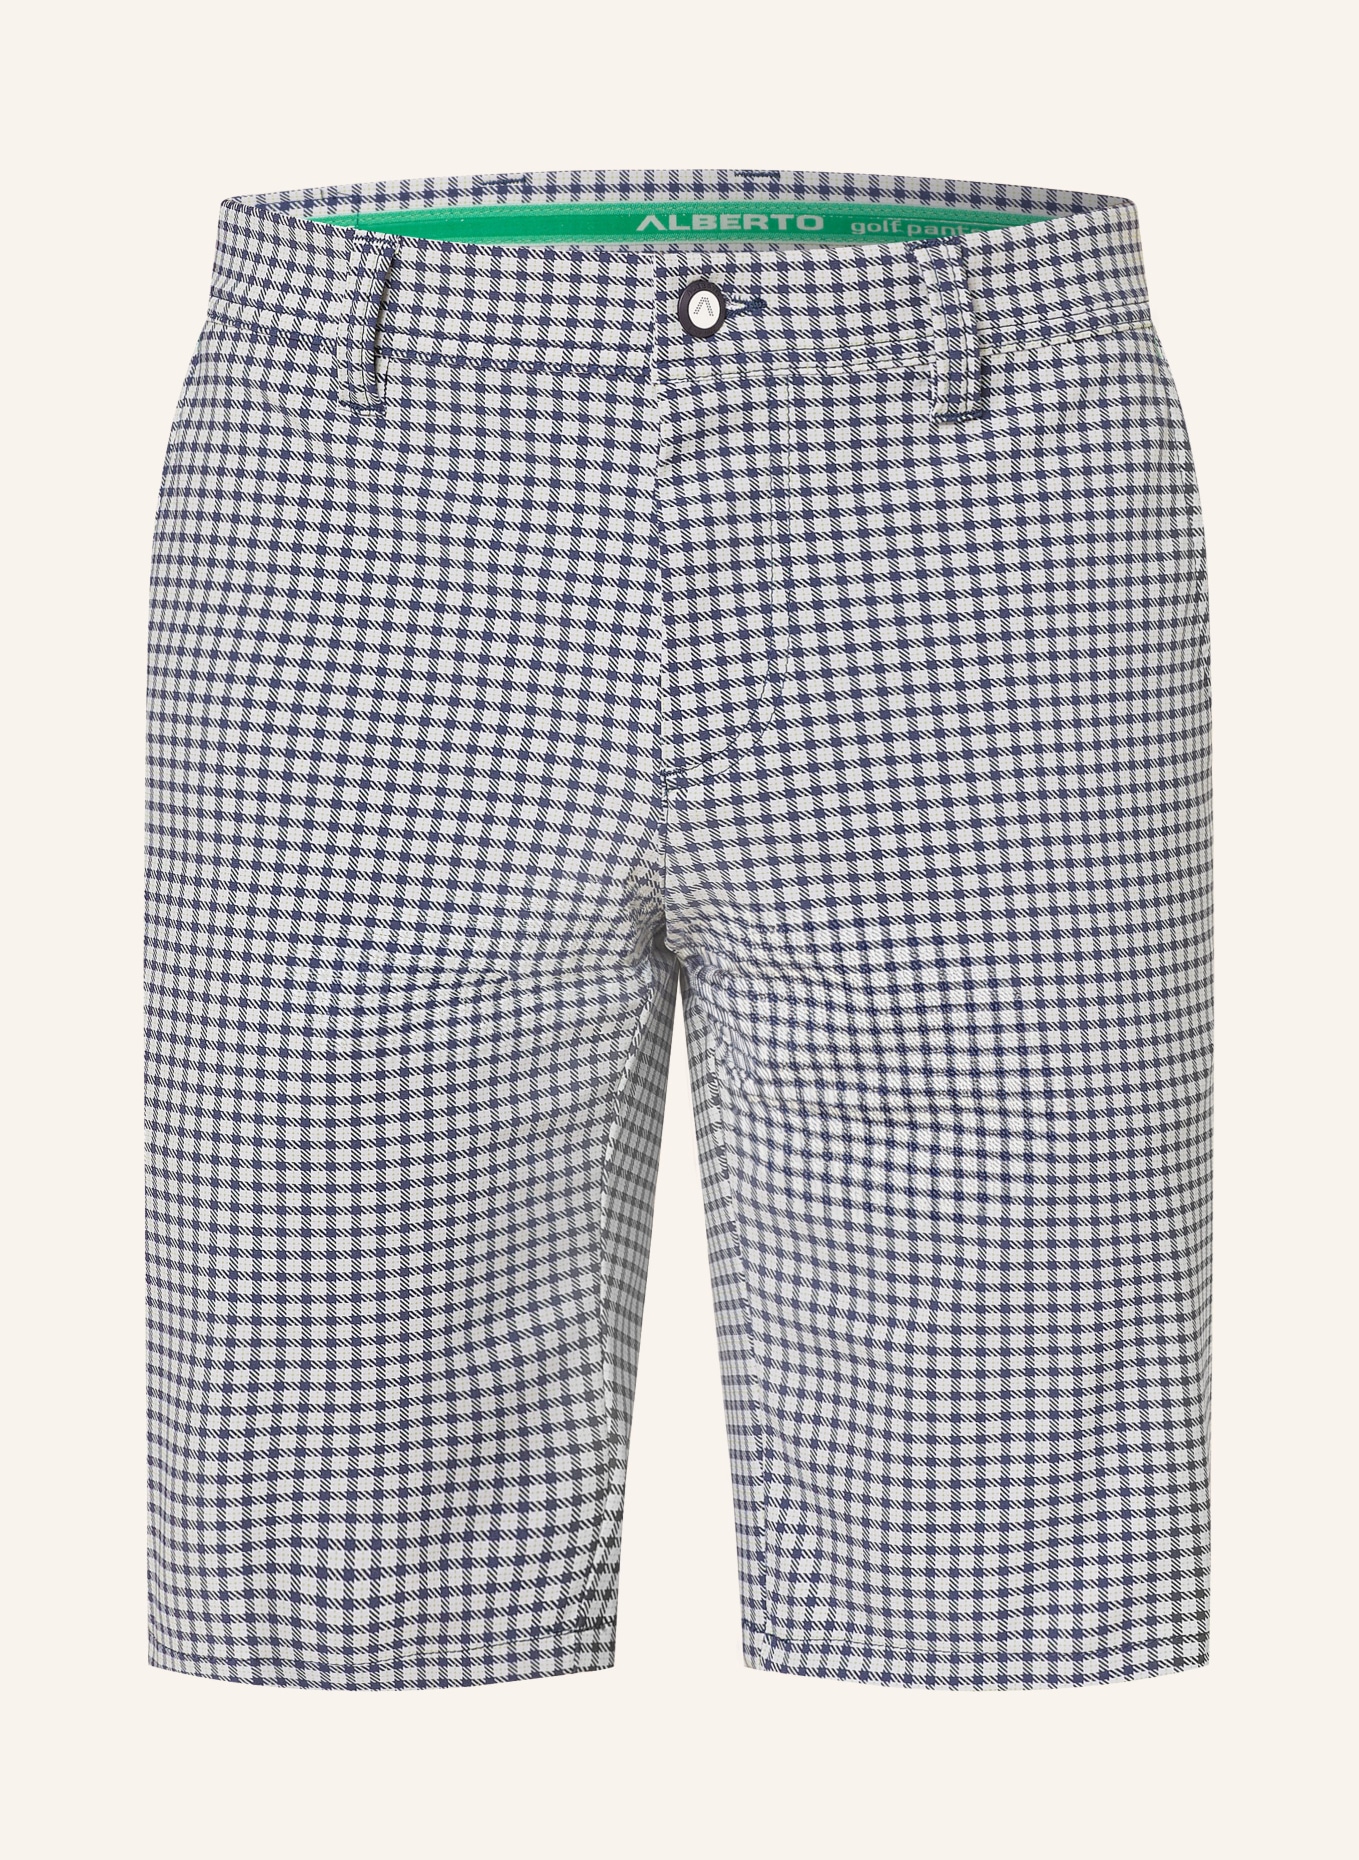 ALBERTO Golf shorts EARNIE, Color: DARK BLUE/ BLUE GRAY (Image 1)